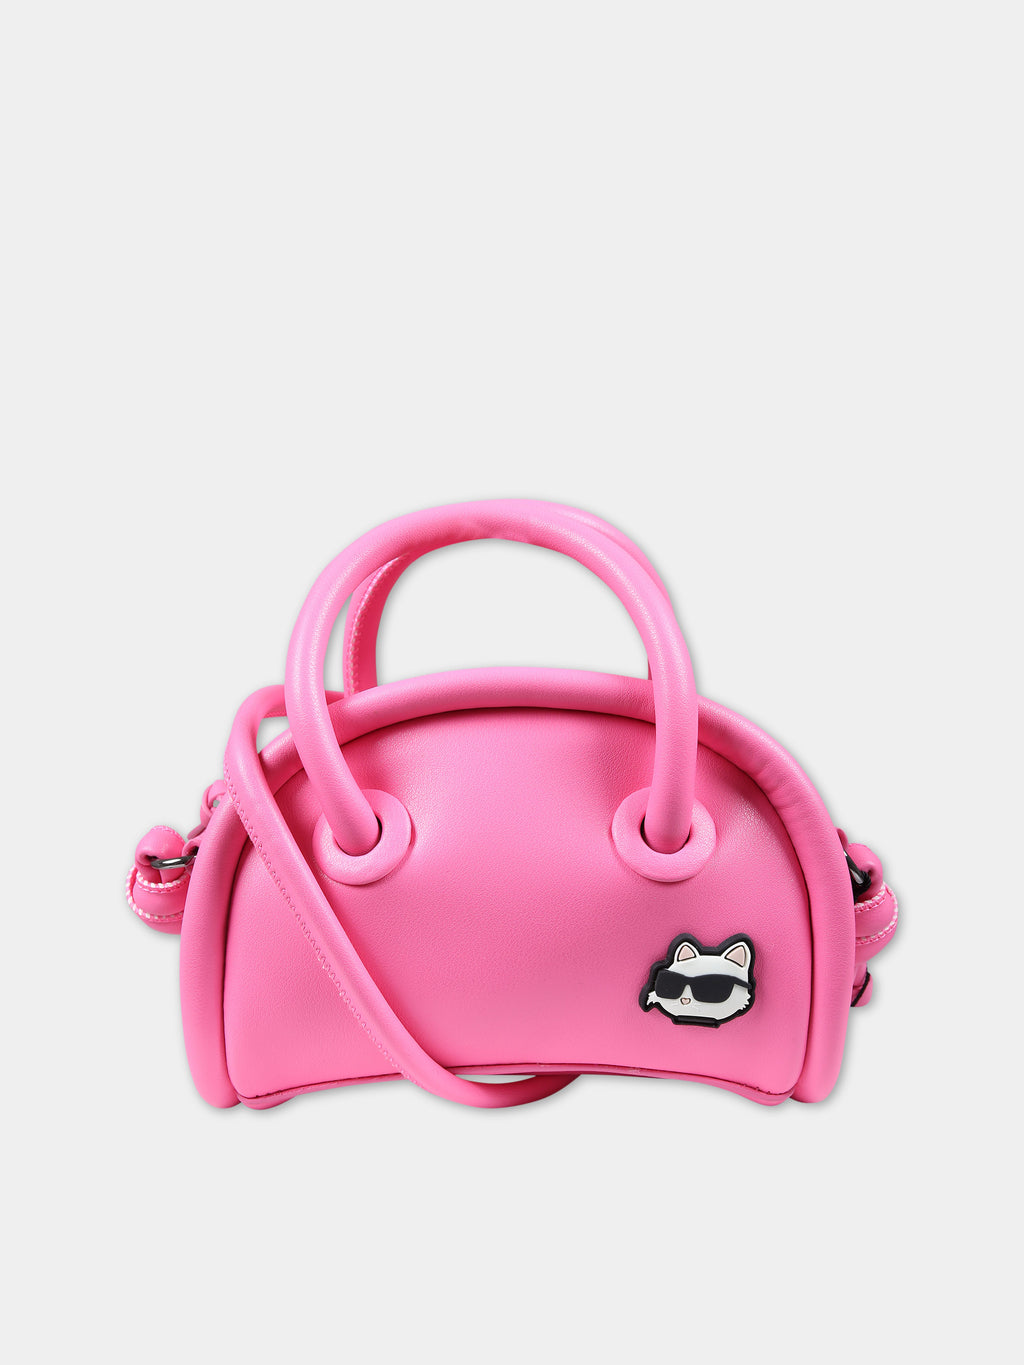 Fuchsia casual bag for girl with logo